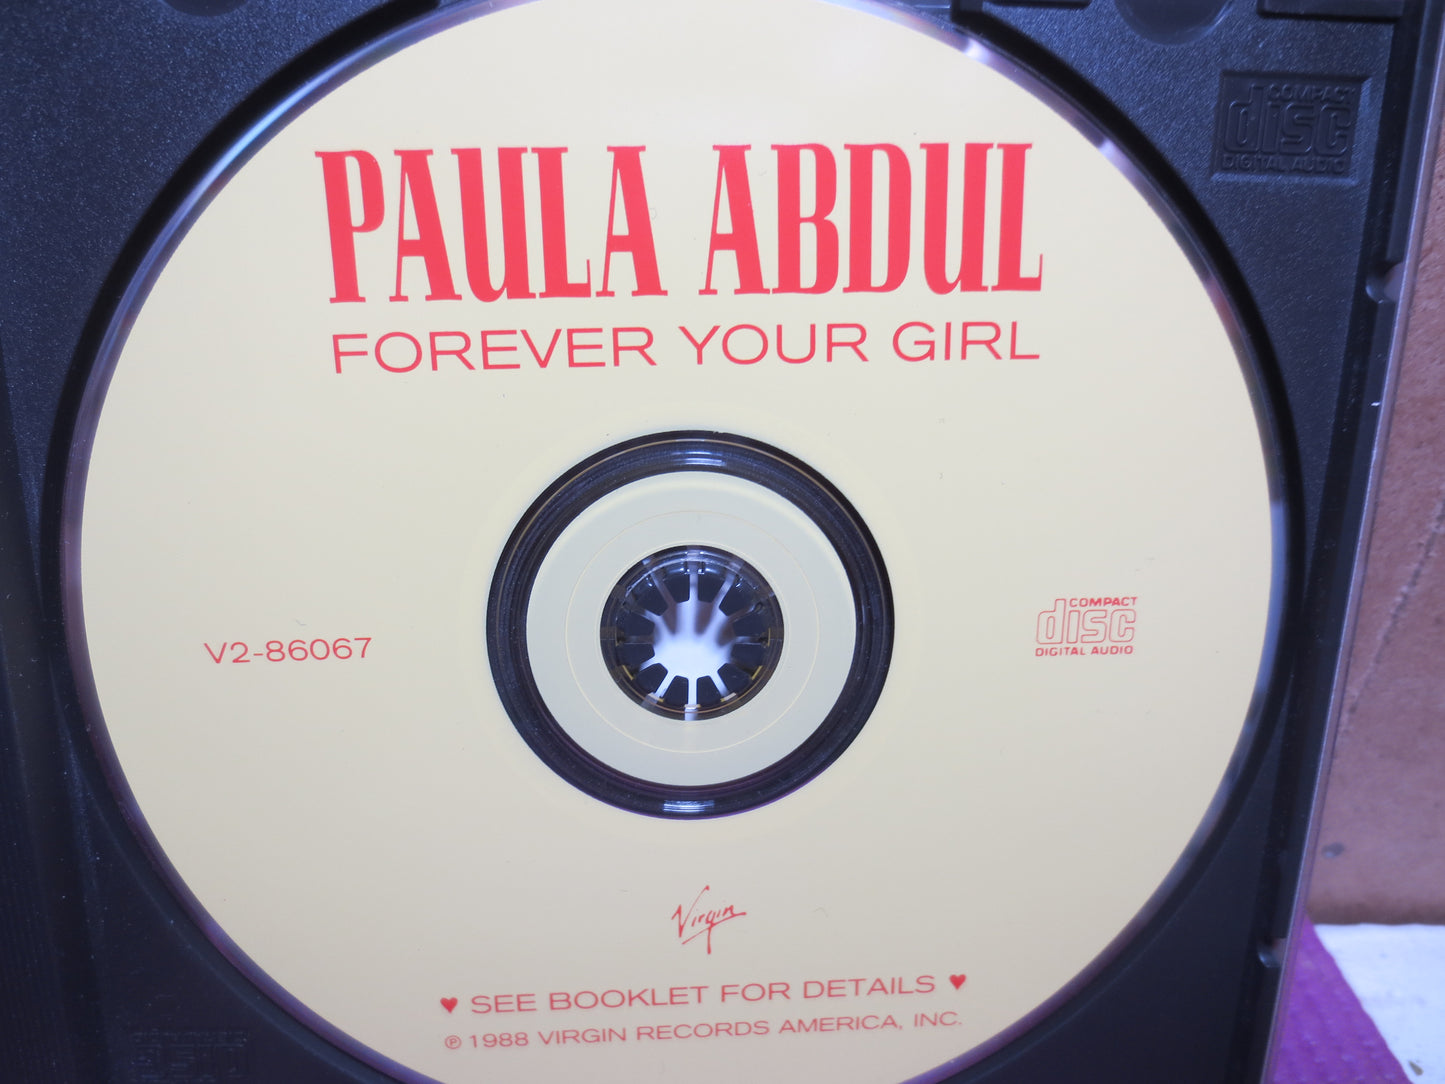 PAULA ABDUL, Forever Your Girl, Paula Abdul Cds, Paula Abdul Albums, Paula Abdul Lps, Paula Abdul Songs, 1988 Compact Discs